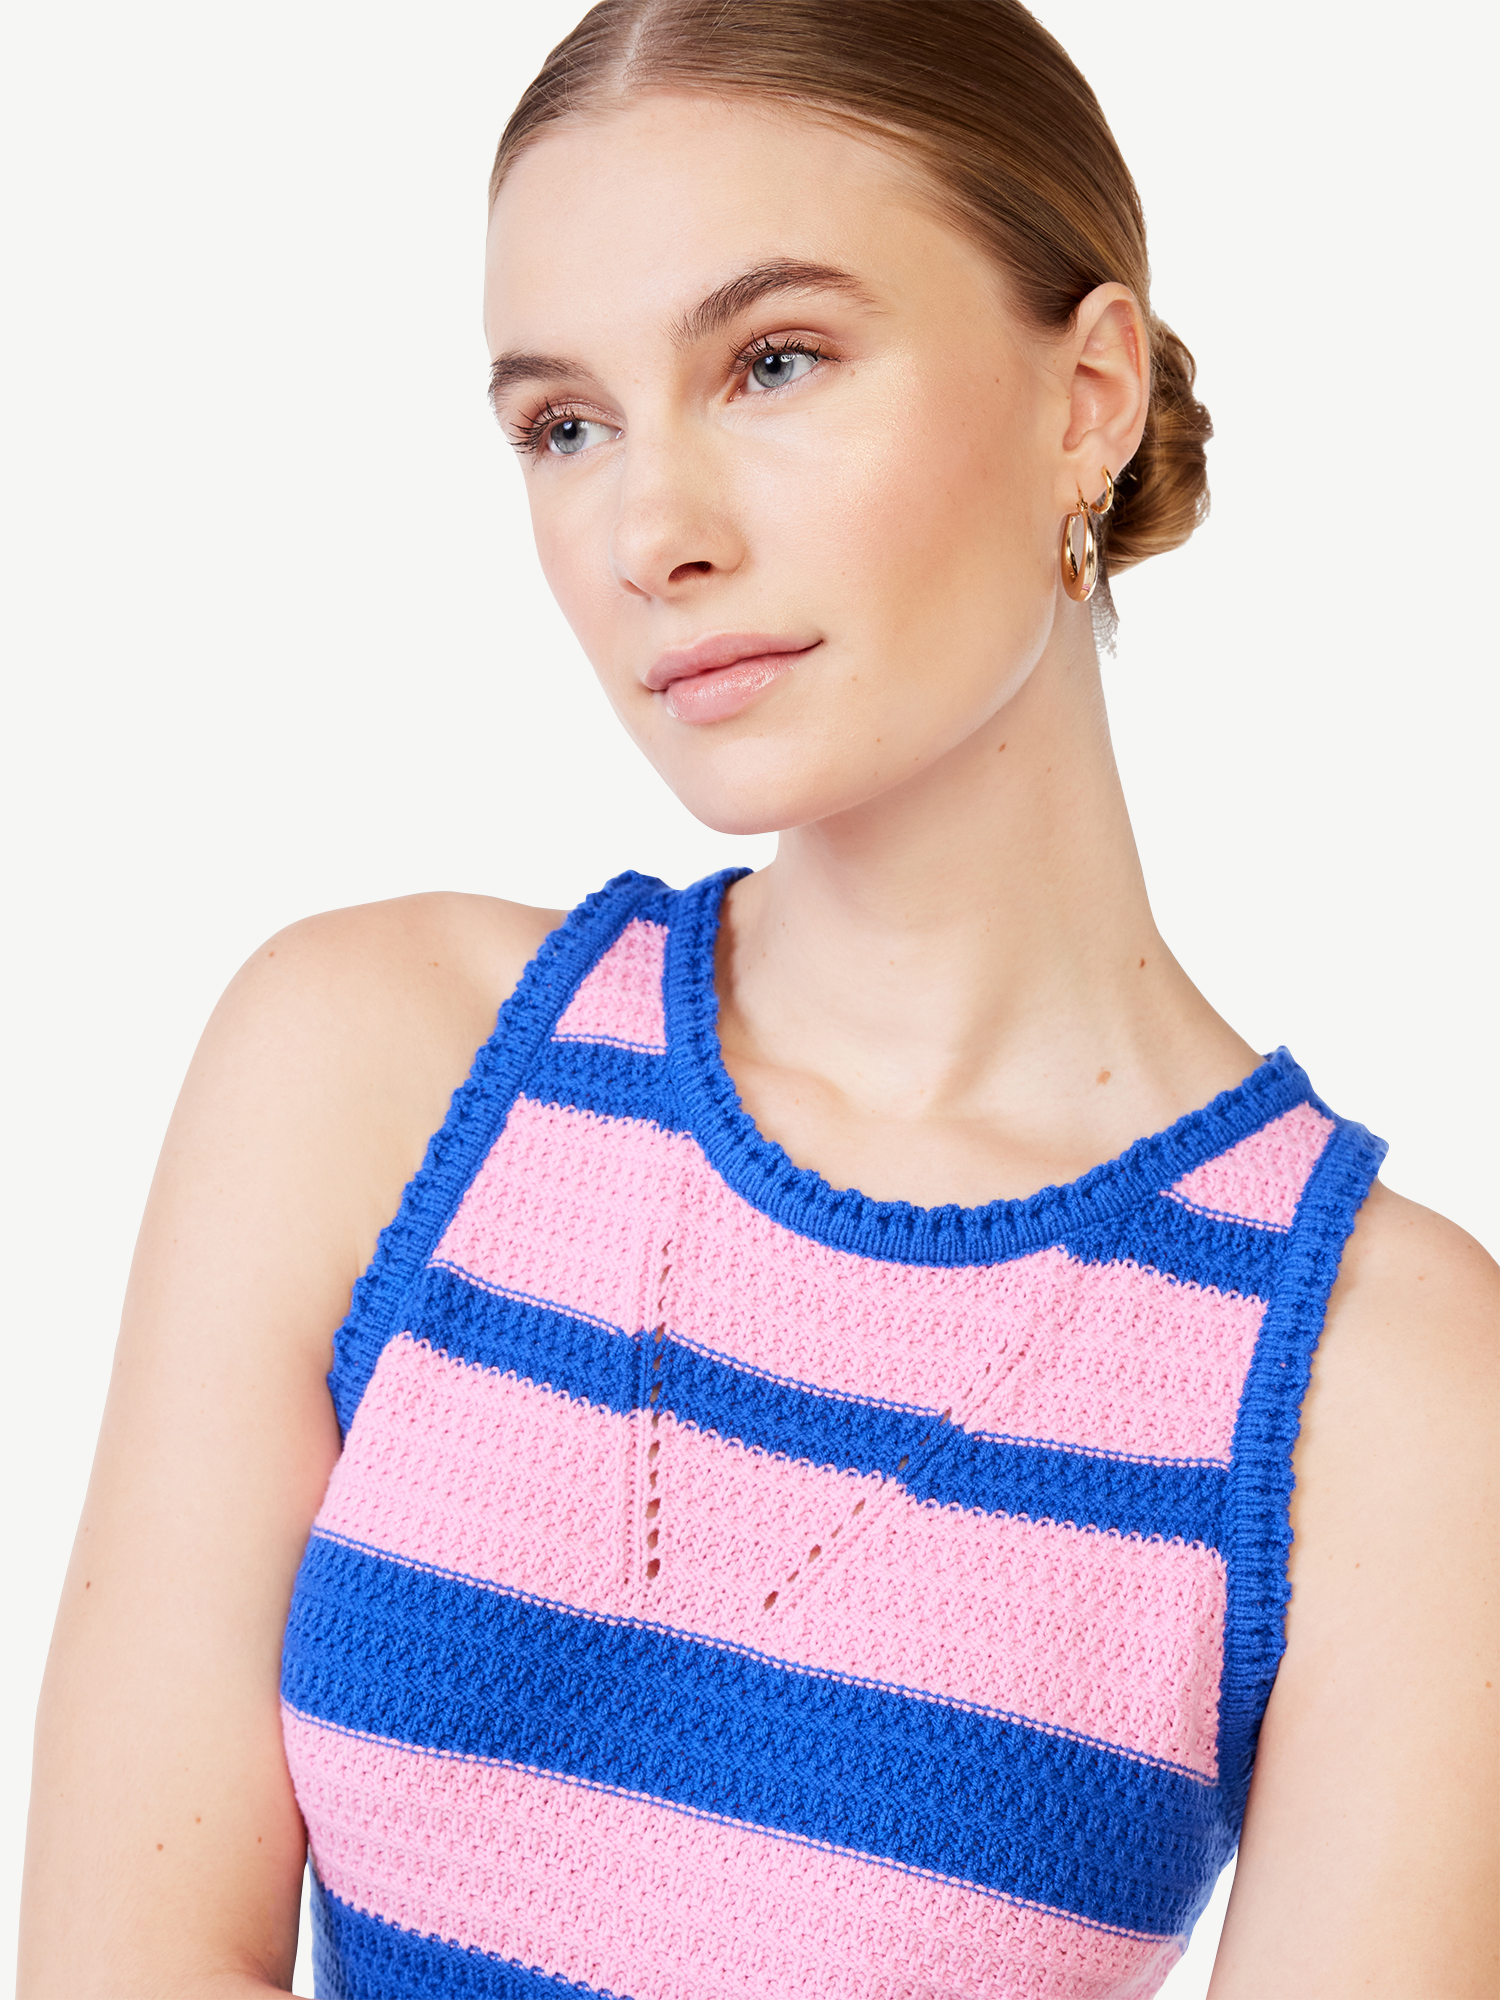 Scoop Women’s Striped Crochet Dress, Mid-Calf Length - image 2 of 5